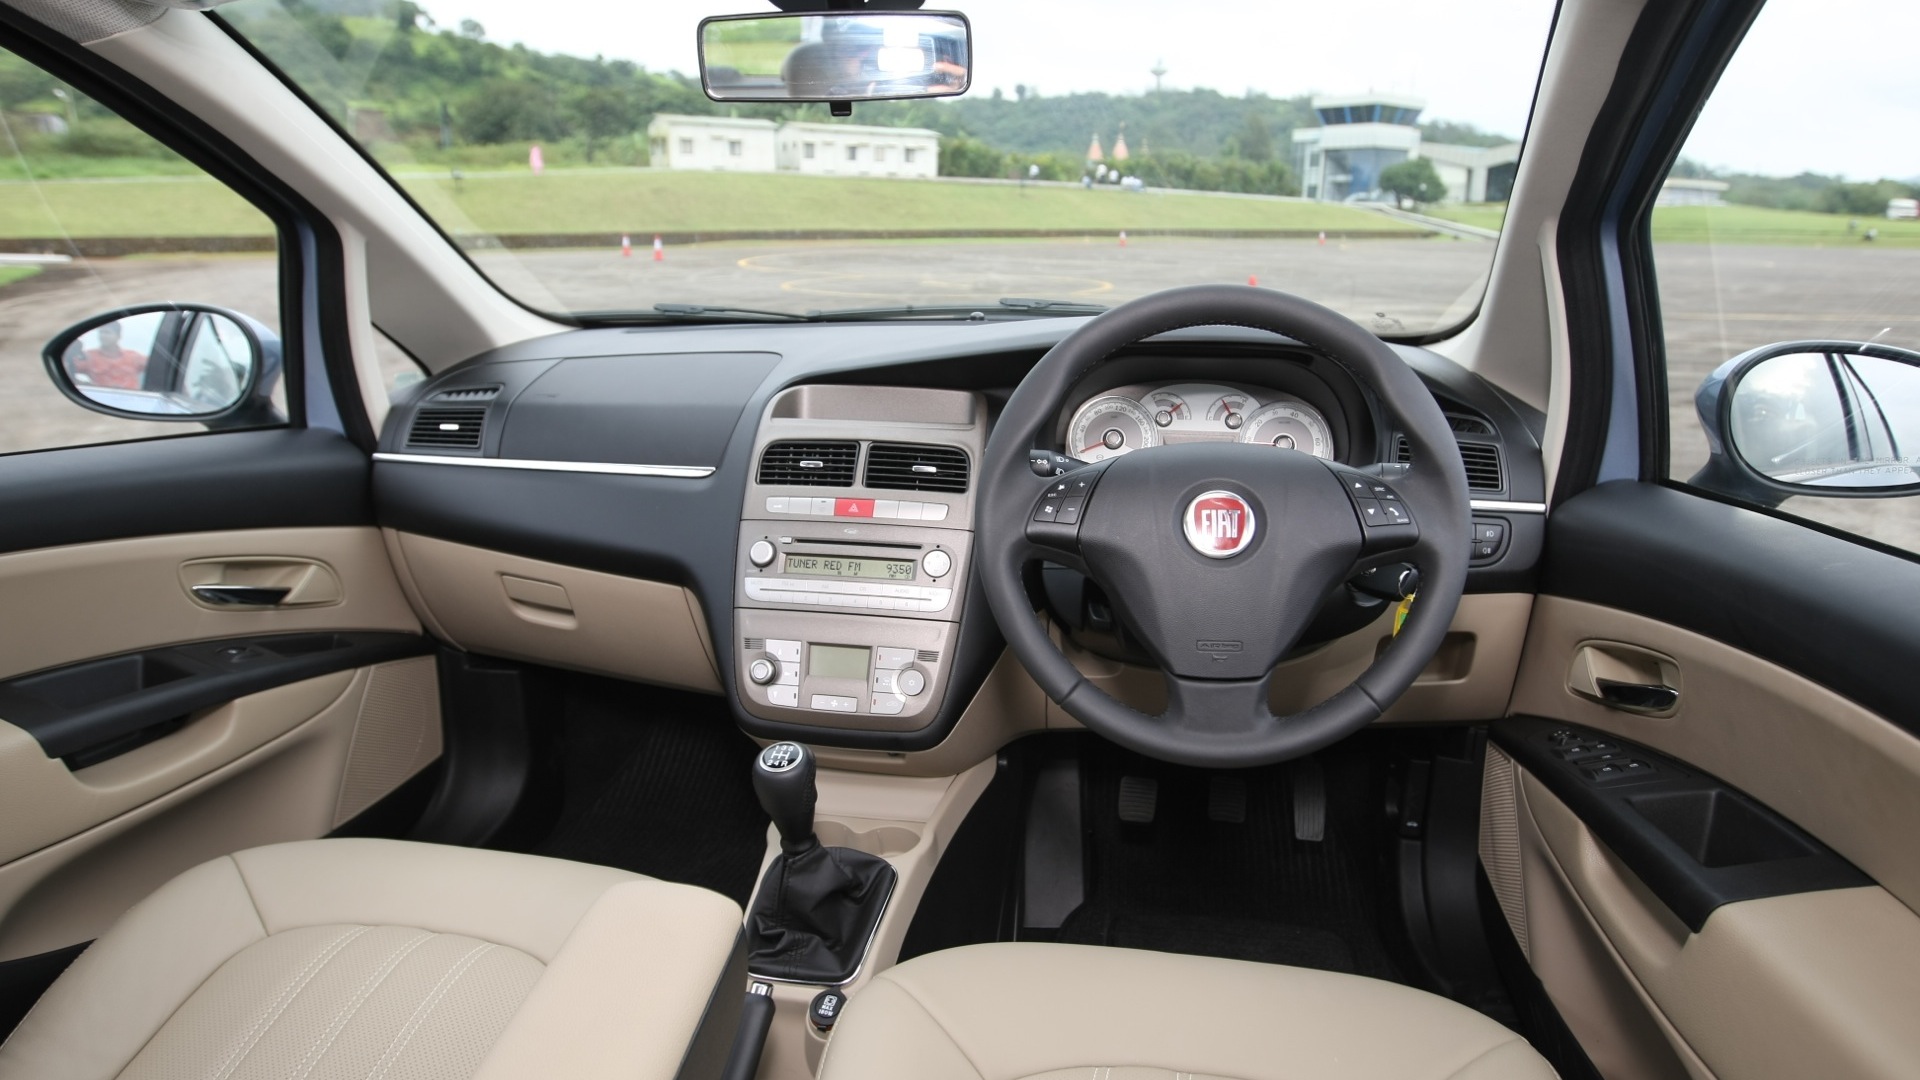 Fiat Linea 2012 Multijet Active Interior Car Photos Overdrive